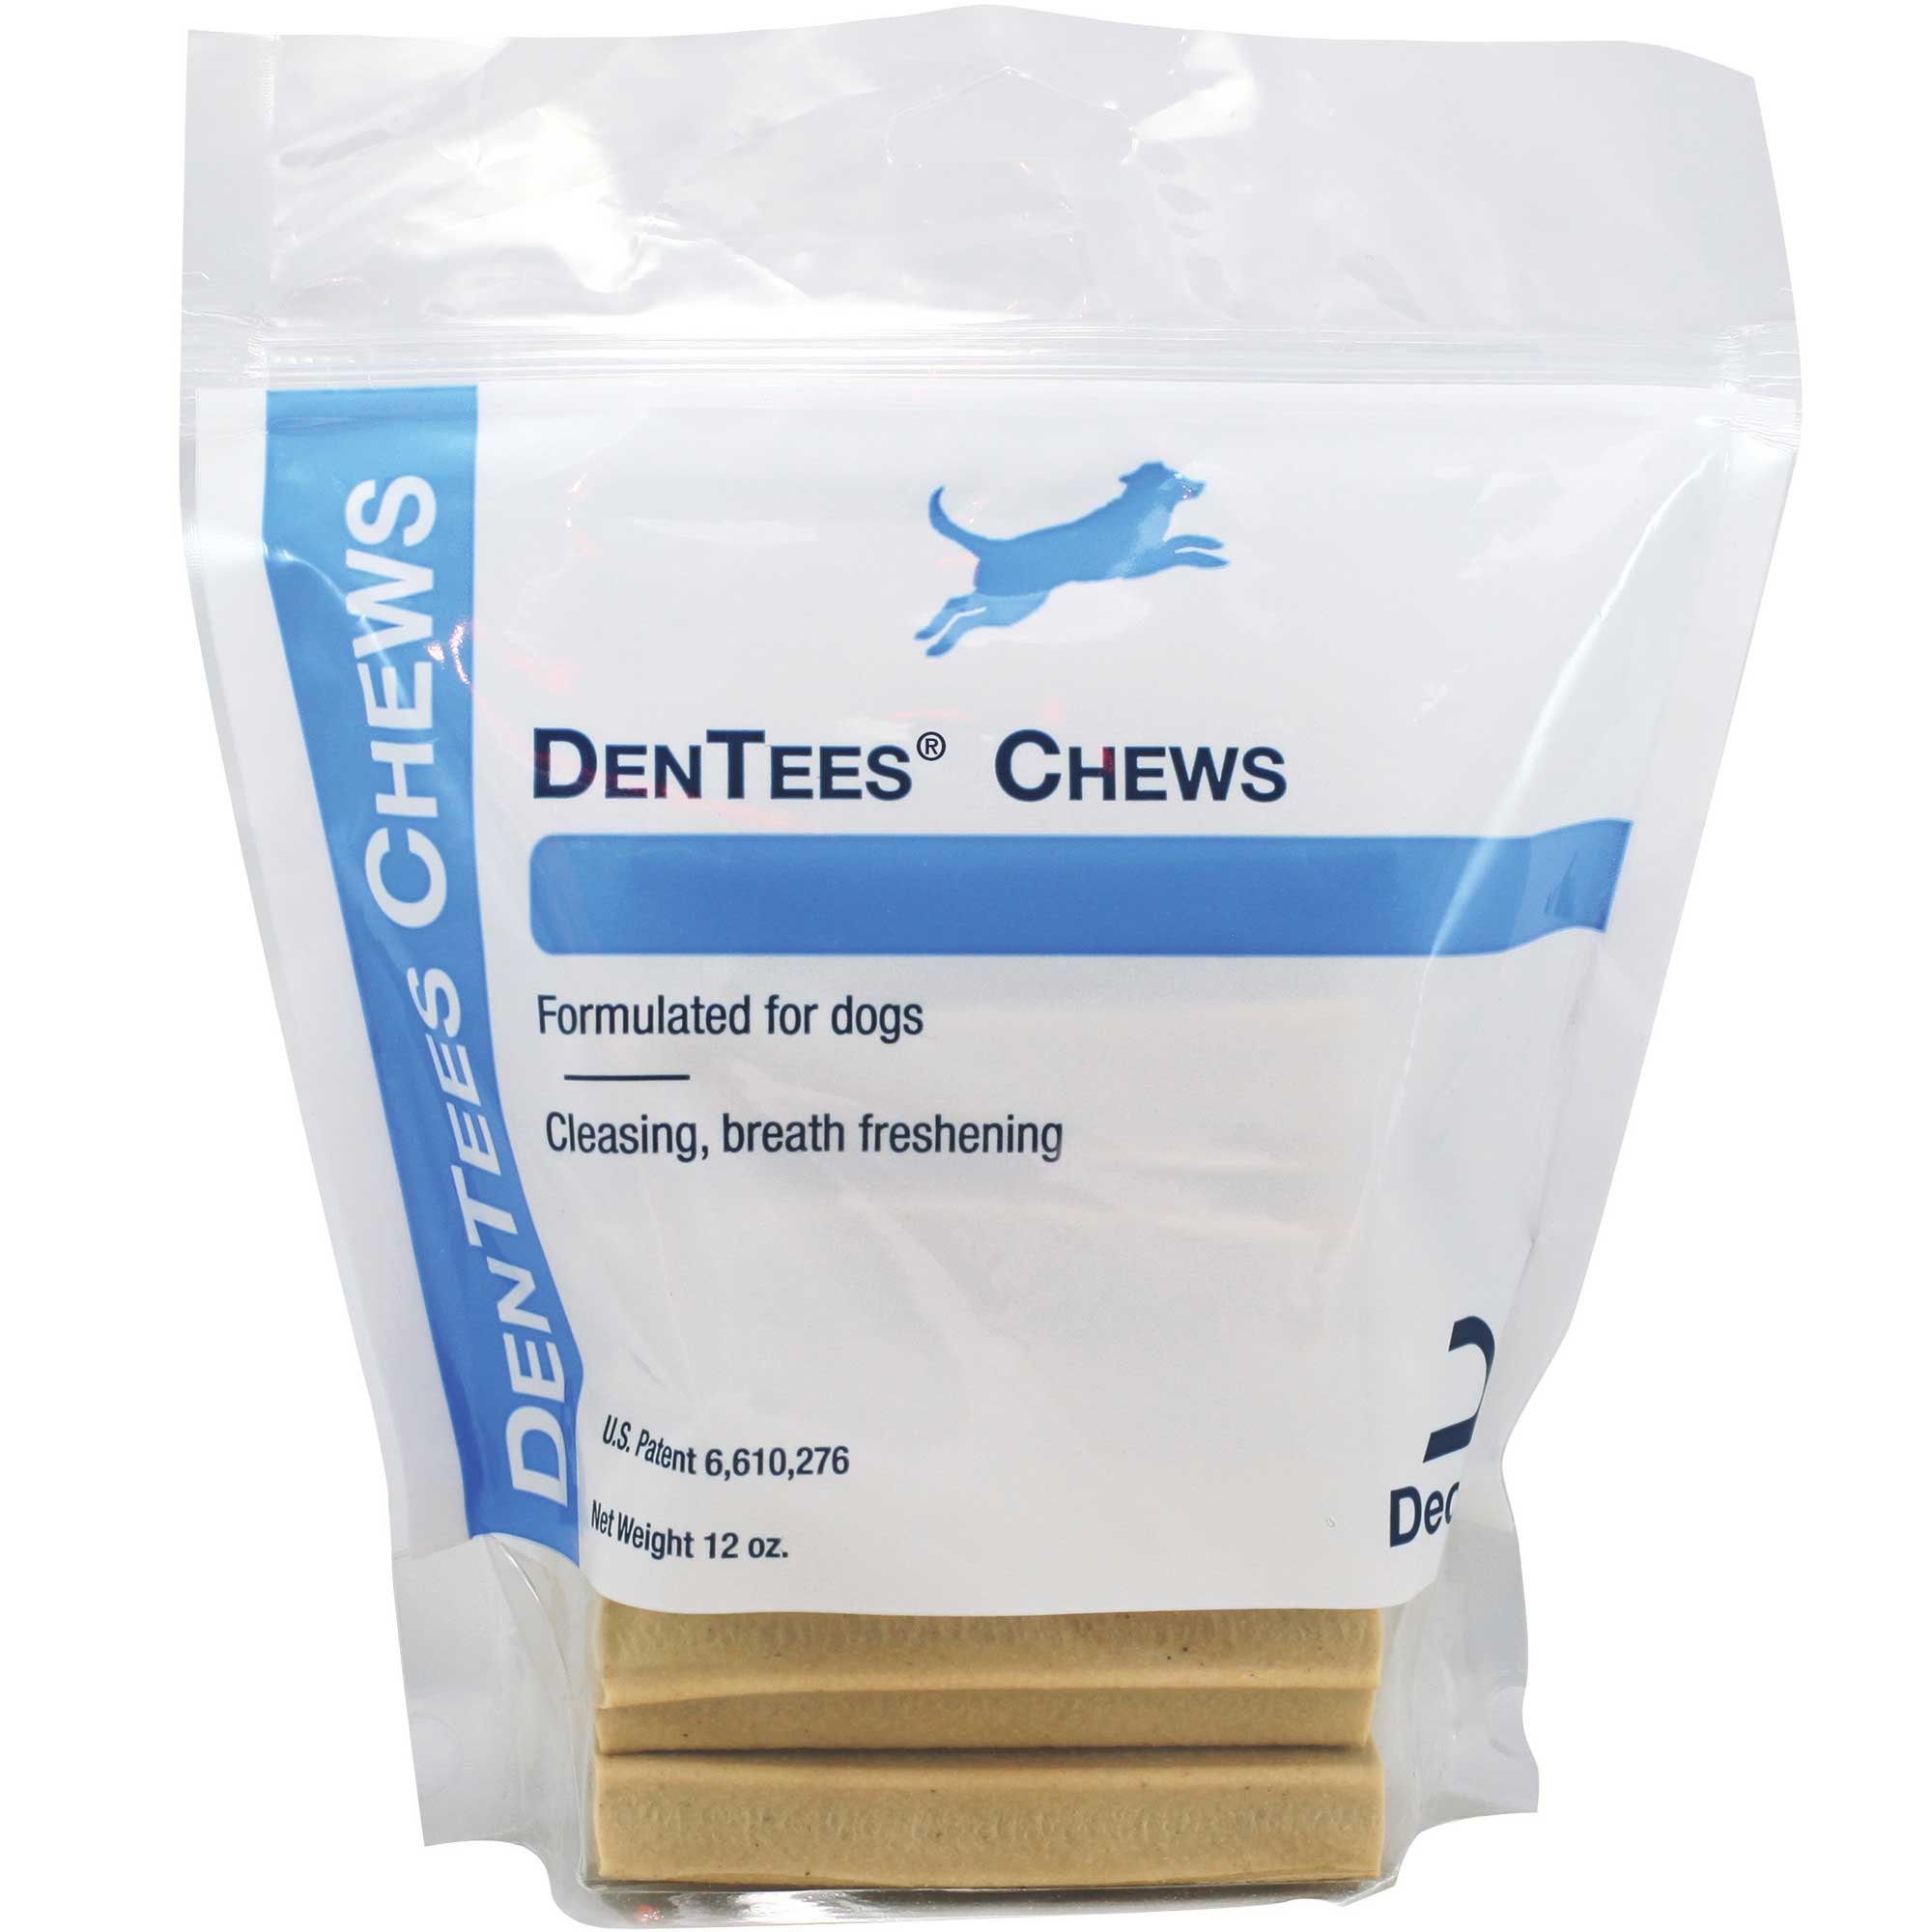 DenTees Chews Usage